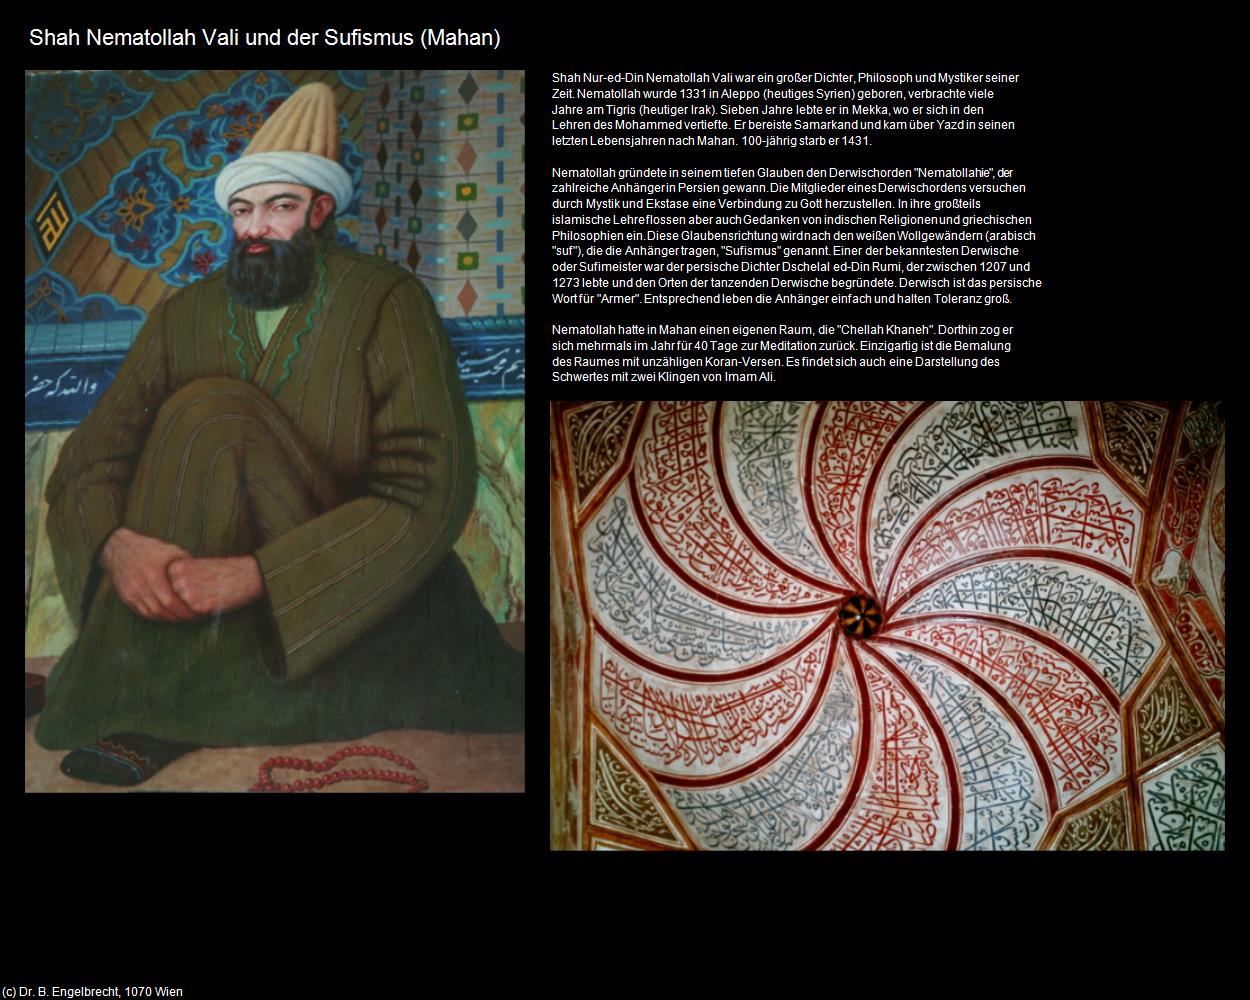 Shah Nematollah Vali und der Sufismus (Mahan) in Iran